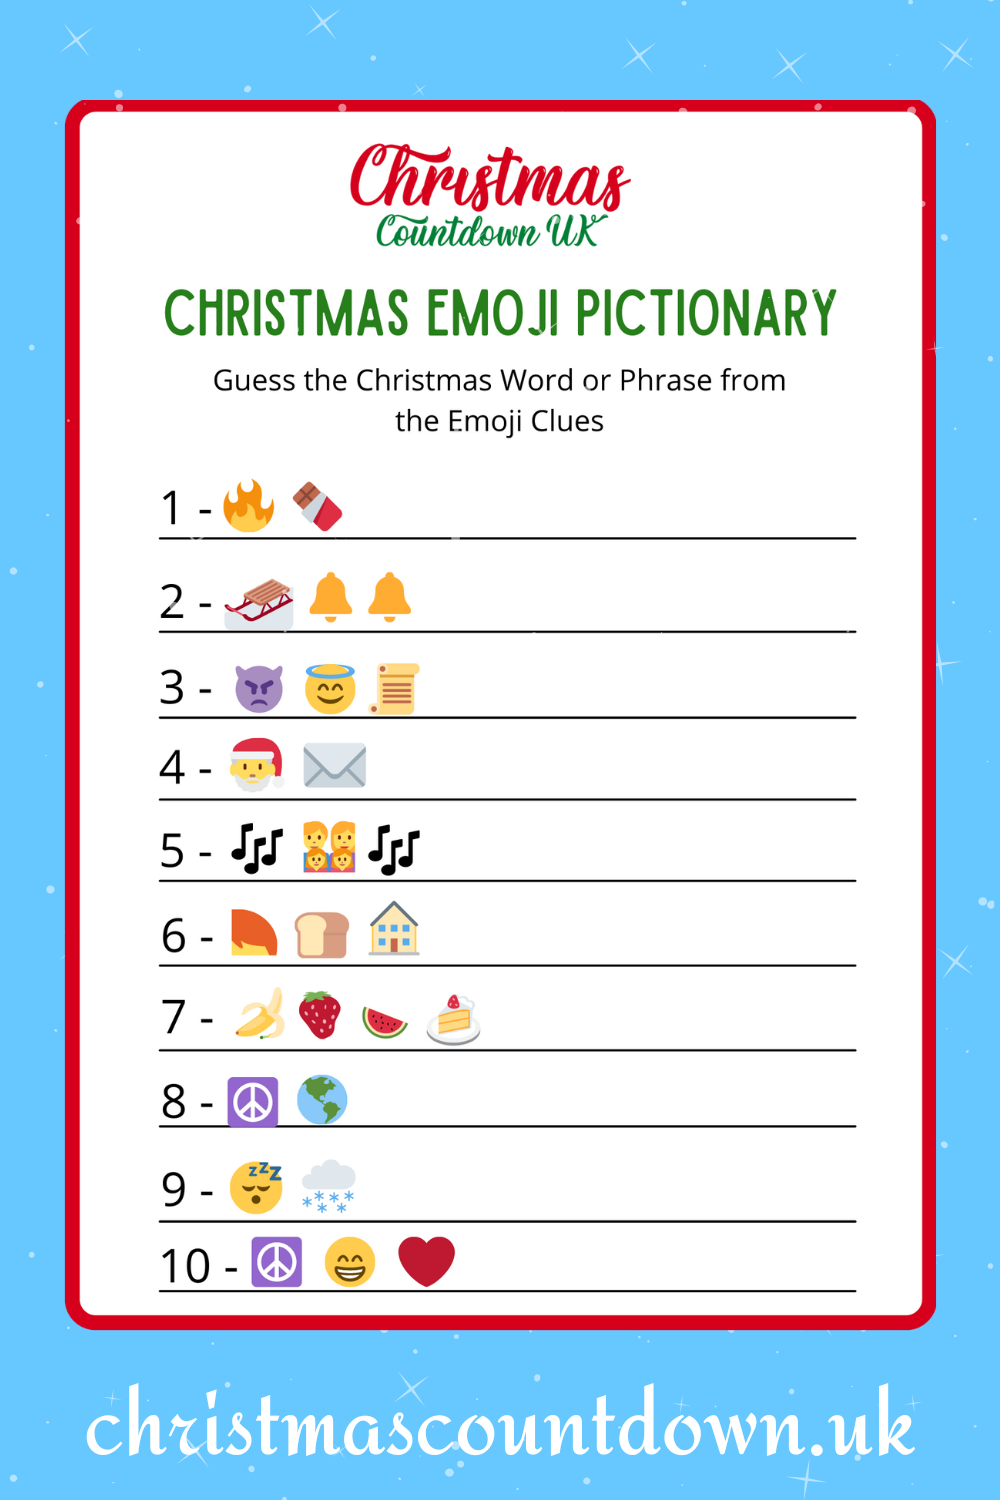 Free Christmas Emoji Pictionary